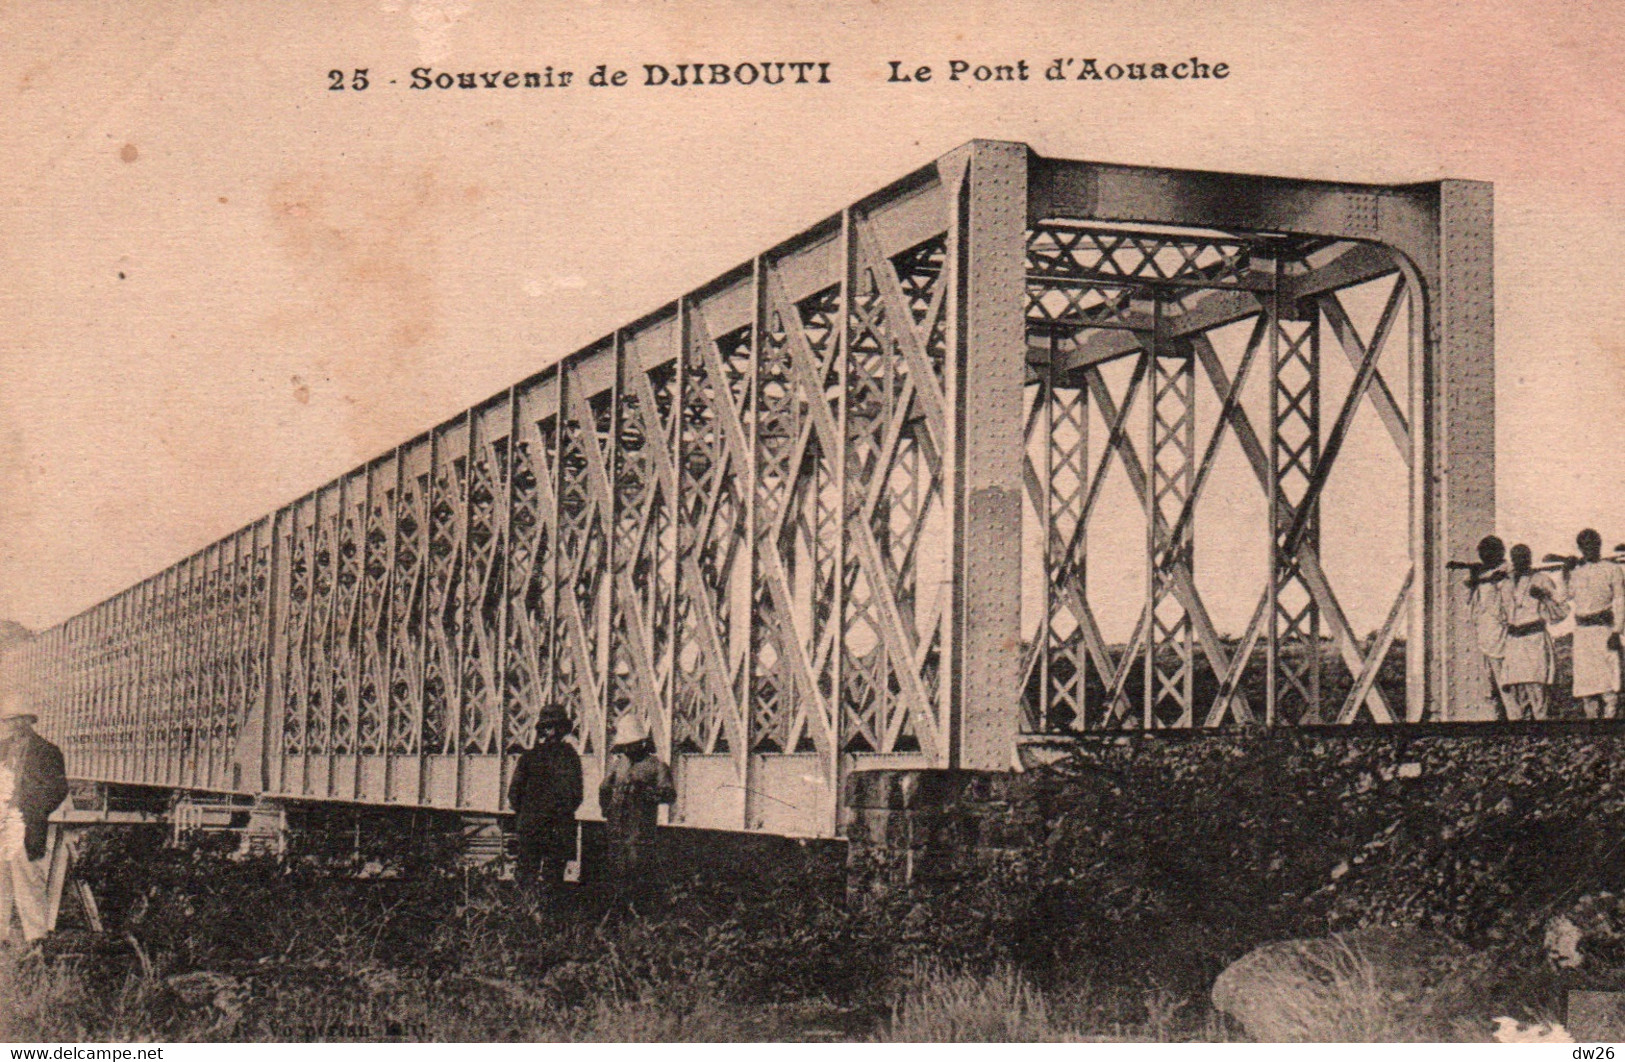 Souvenir De Djibouti - Le Pont D'Aouache - Edition Vorperian - Carte N° 25 Non Circulée - Djibouti